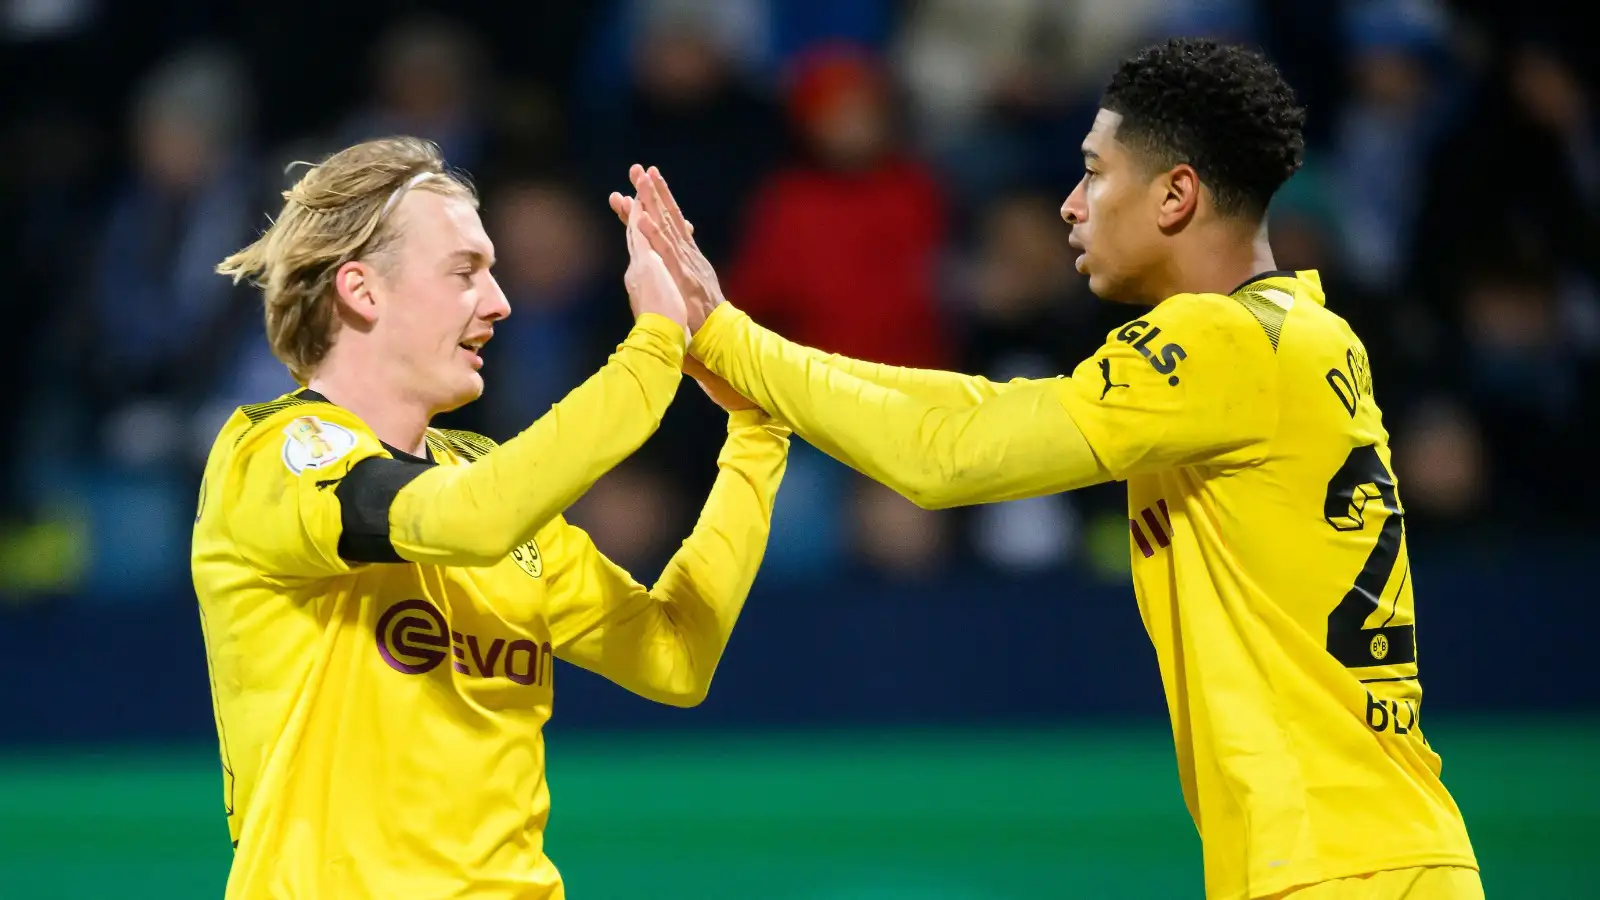 Tottenham transfer talk prompts top Bundesliga midfielder to hesitate over signing new Dortmund deal